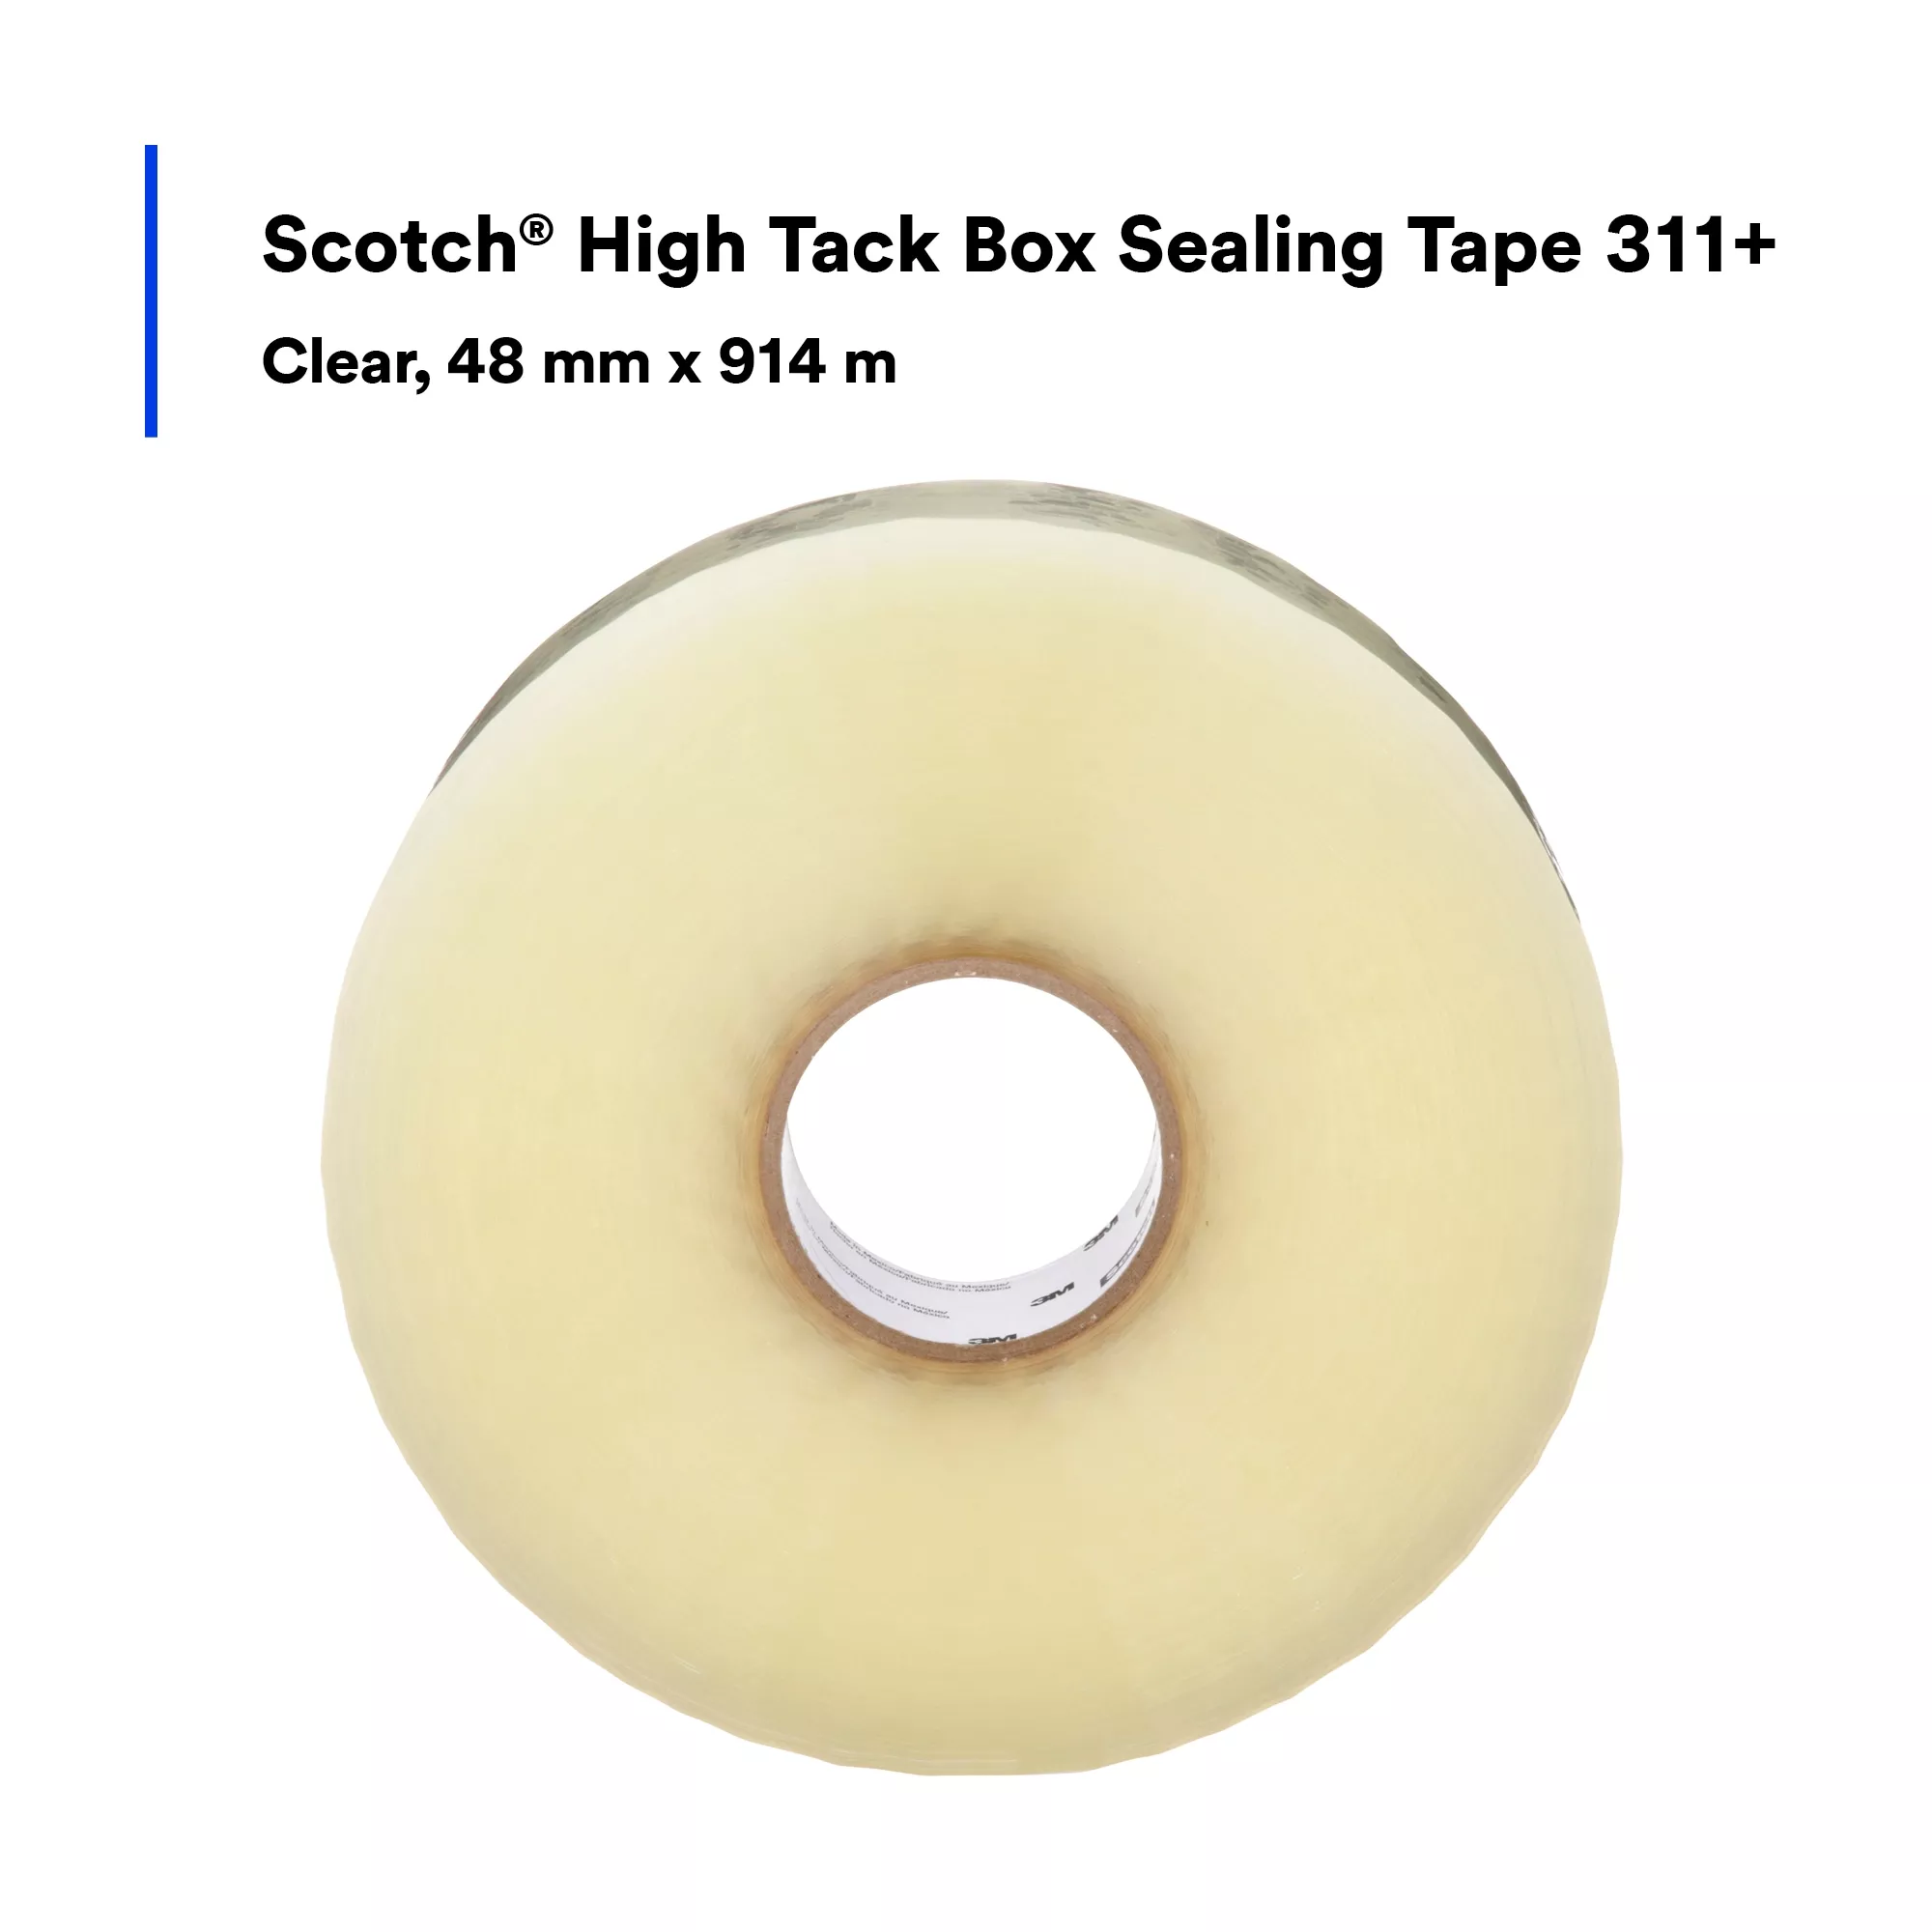 SKU 7100253856 | Scotch® High Tack Box Sealing Tape 311+